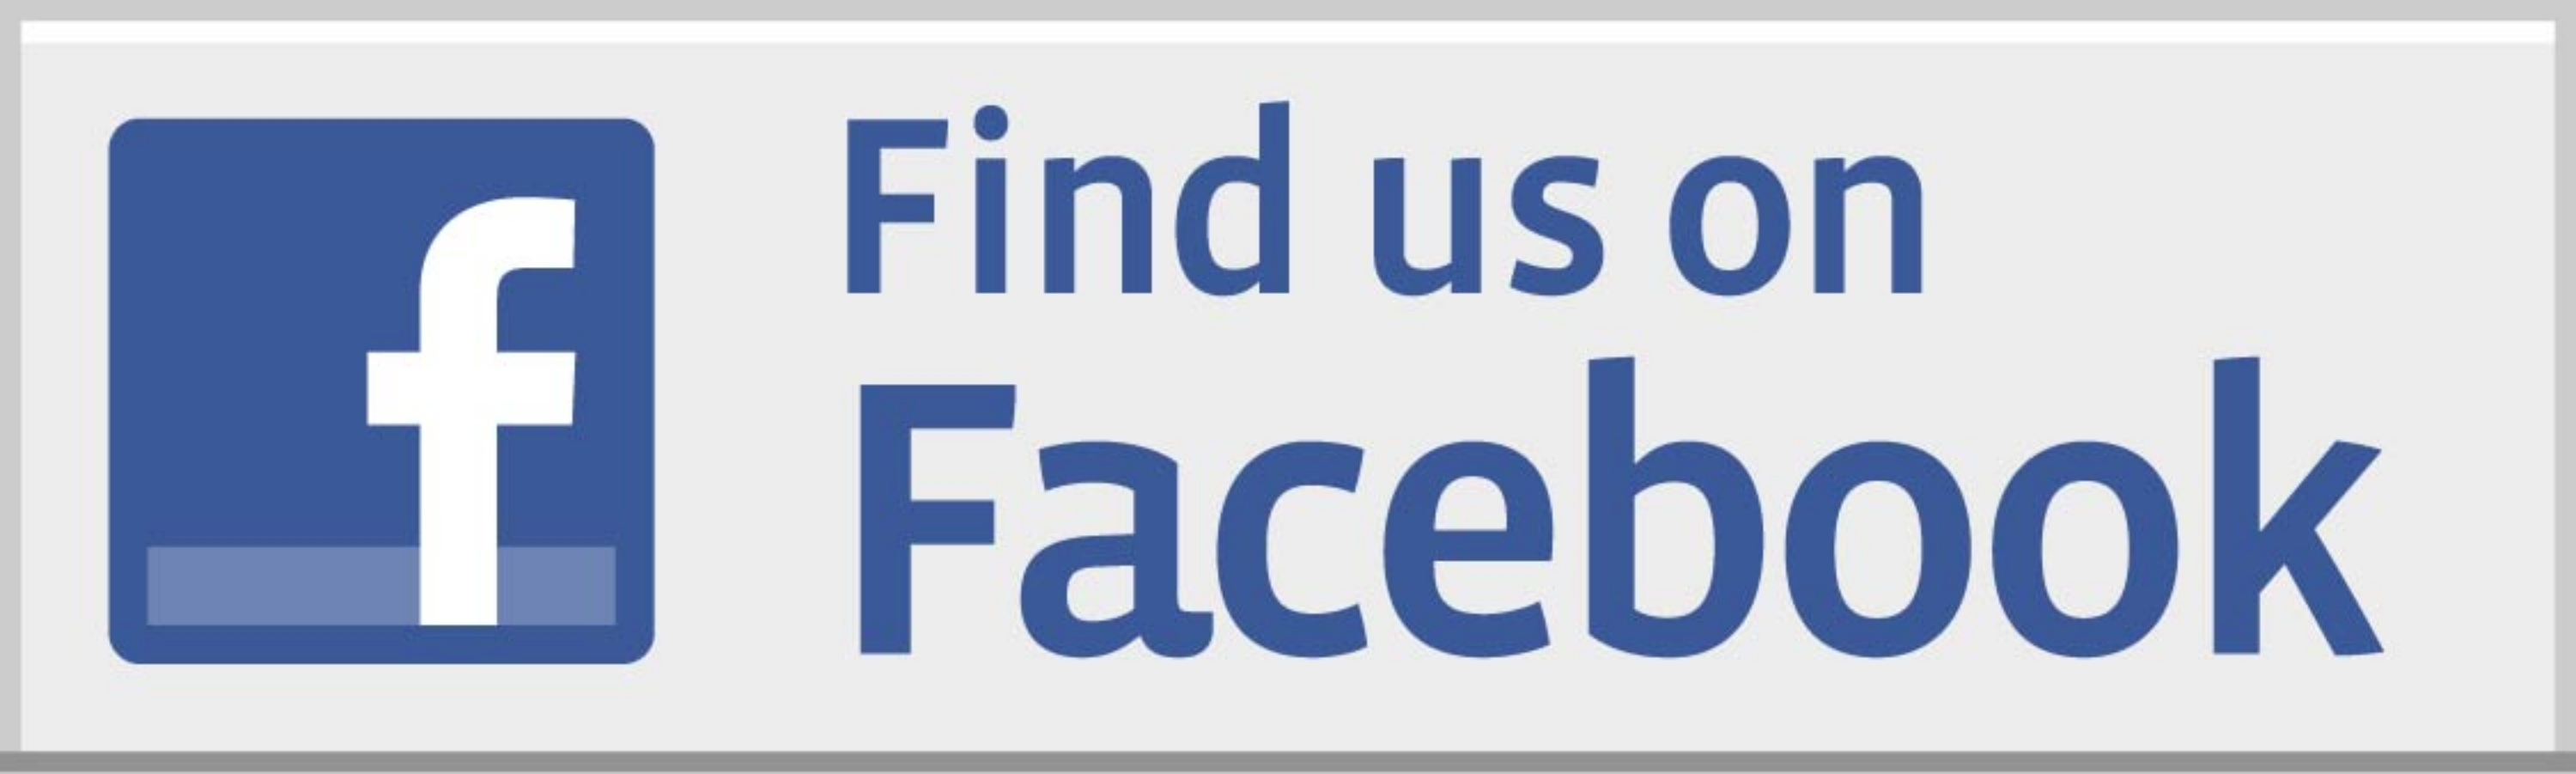 Find Us On Facebook Vector PNG - 34027